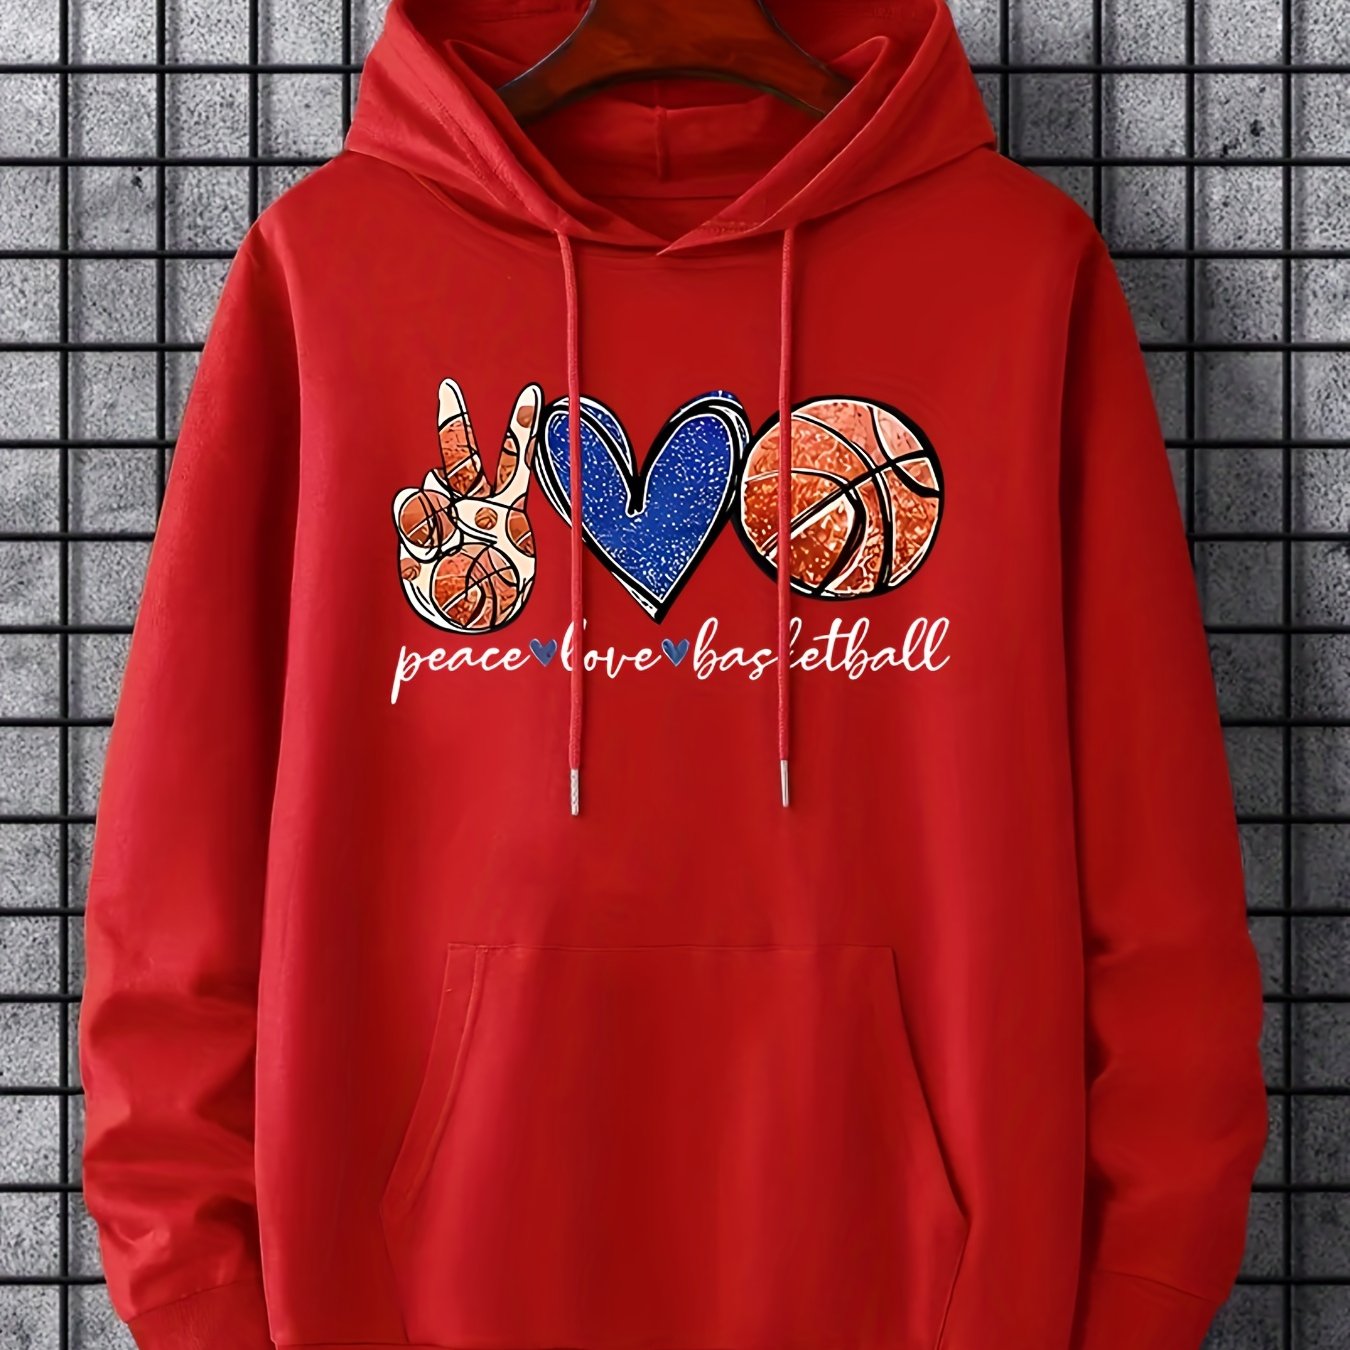 I Love Basketball Red Sweatshirt